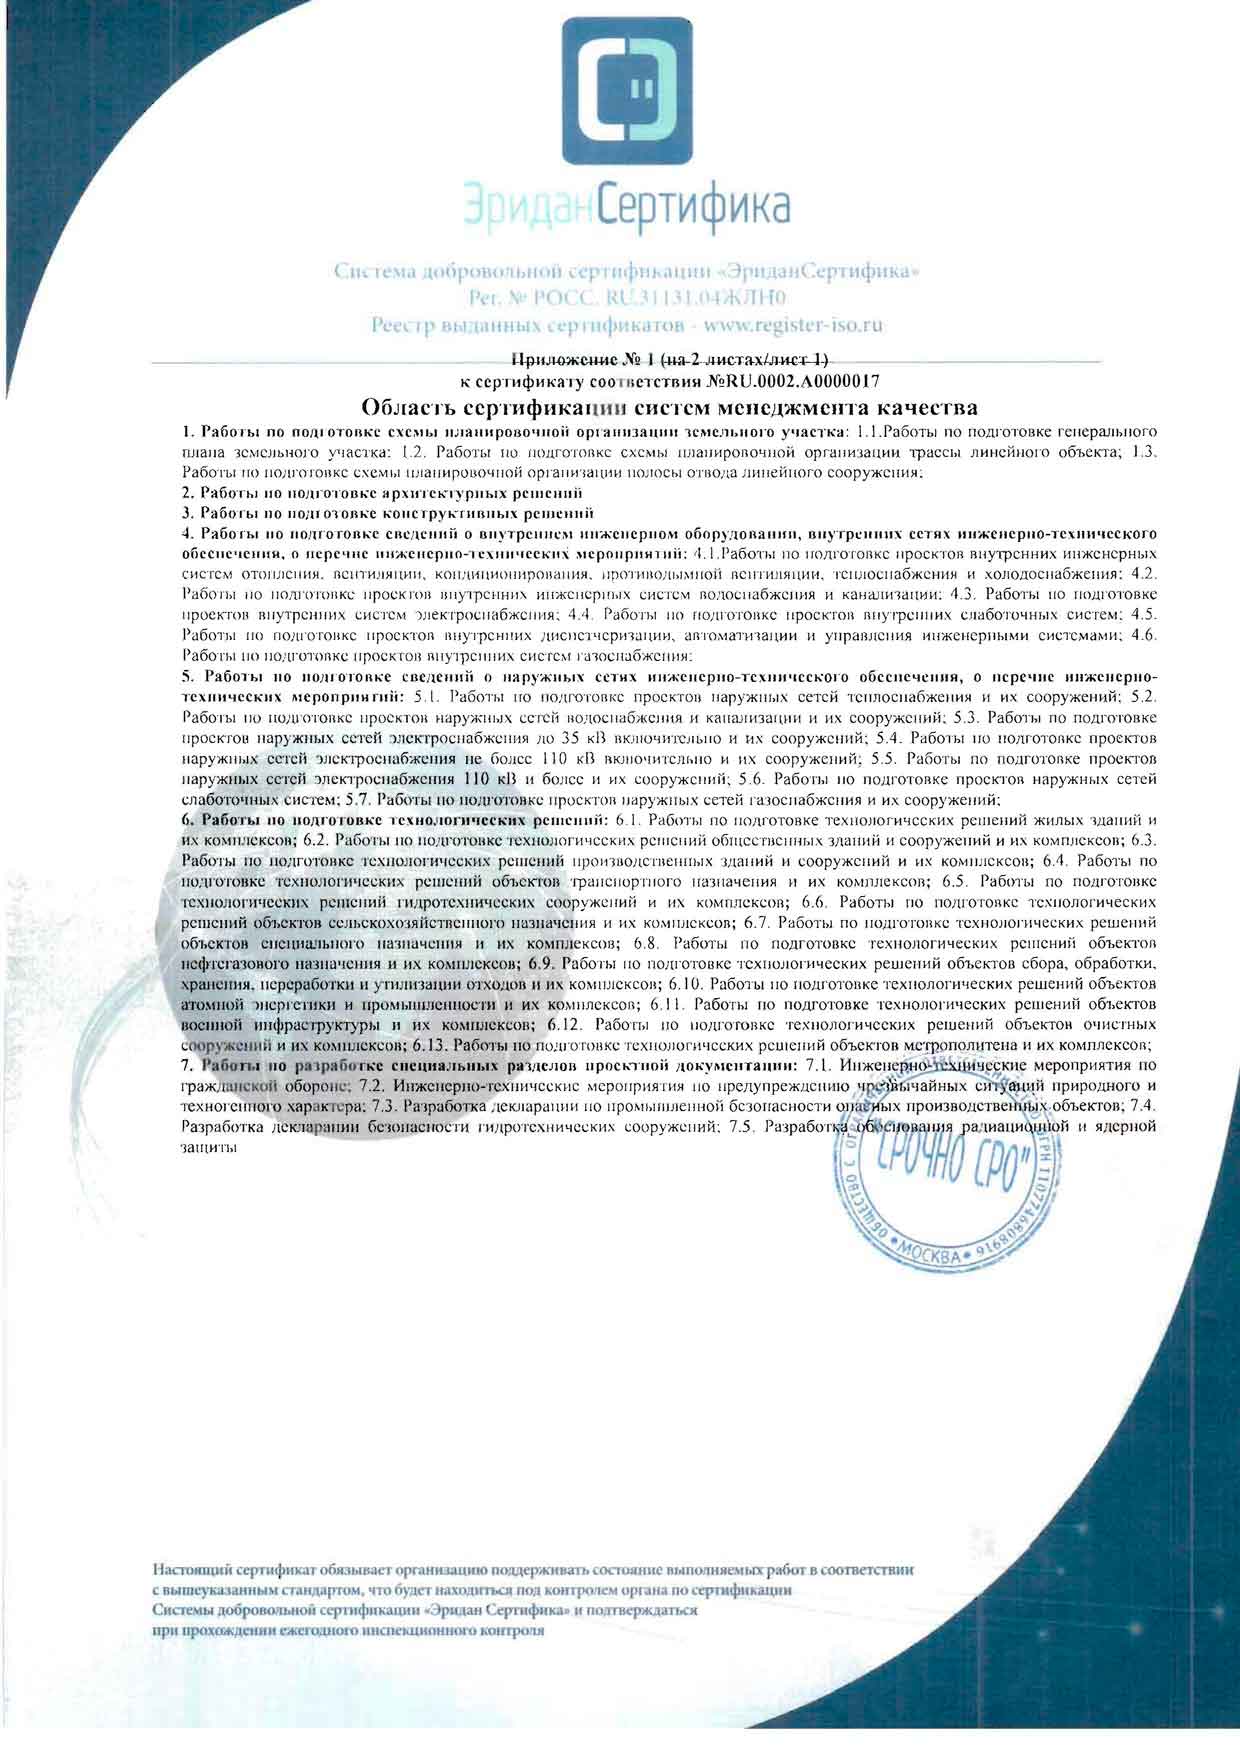 160х230 Compliance Certificate PD-7